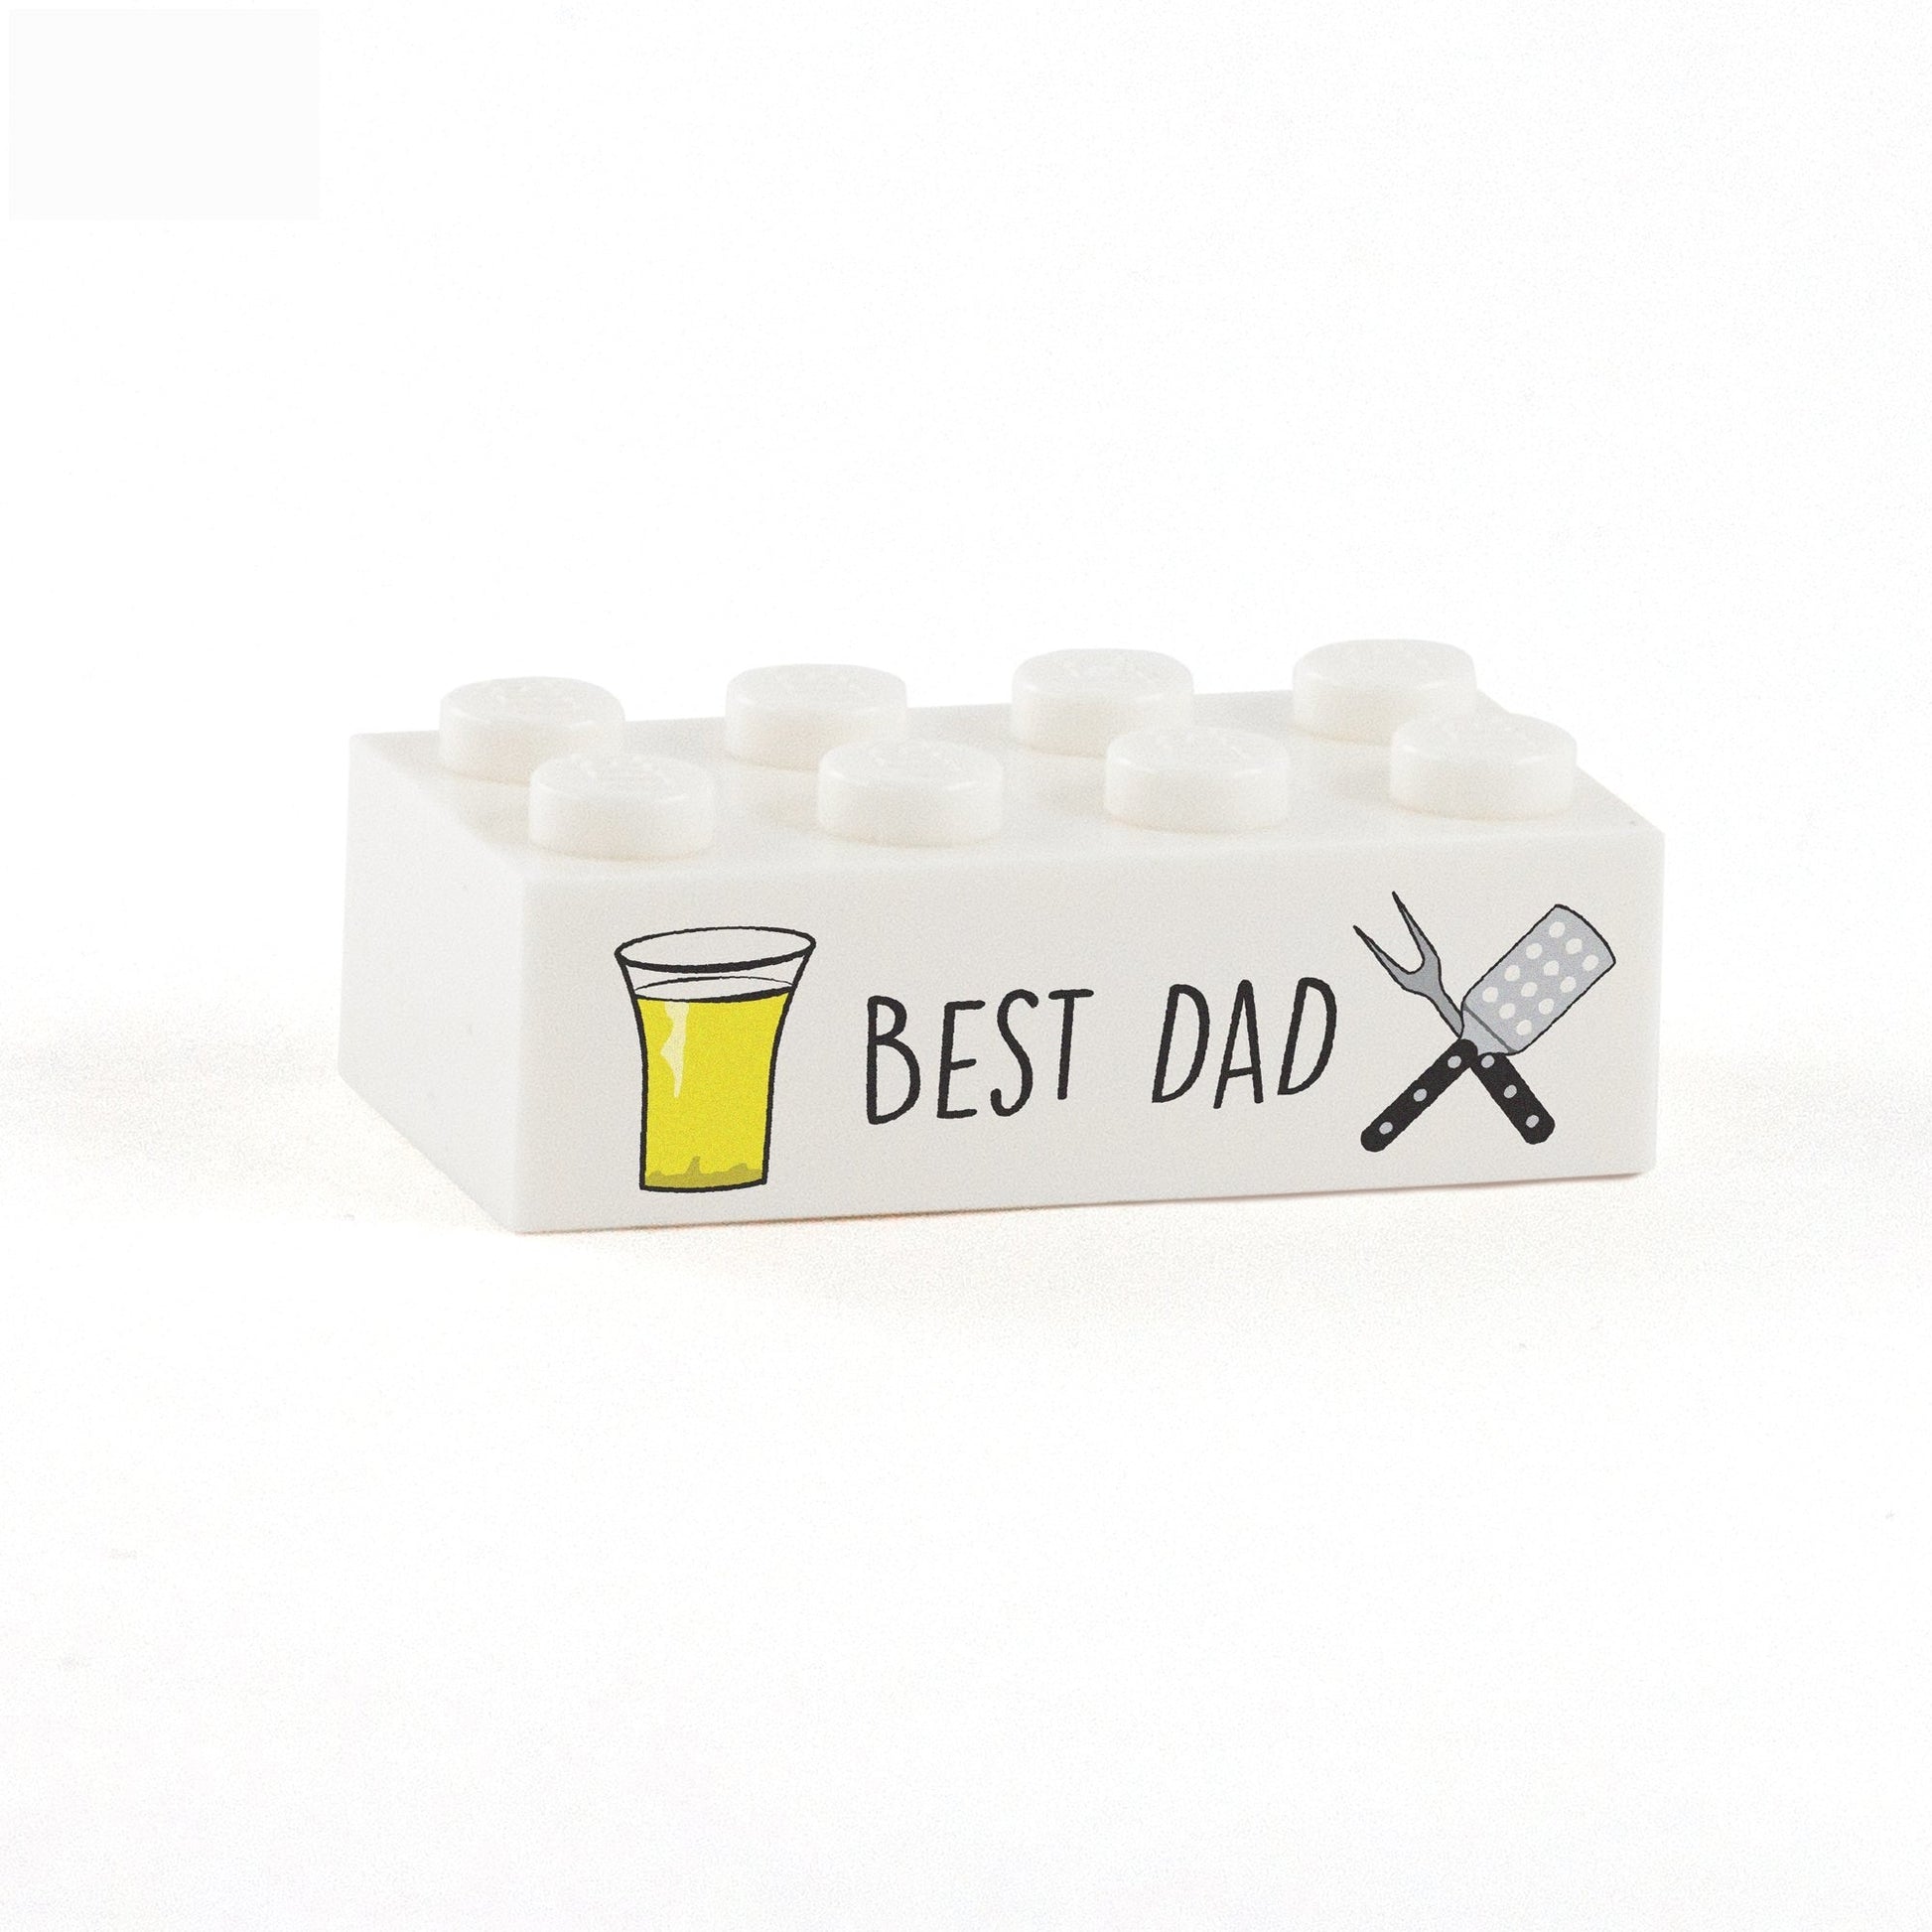 Best Dad Display Brick - Custom Printed 2x4 LEGO Brick, Minifigure Display